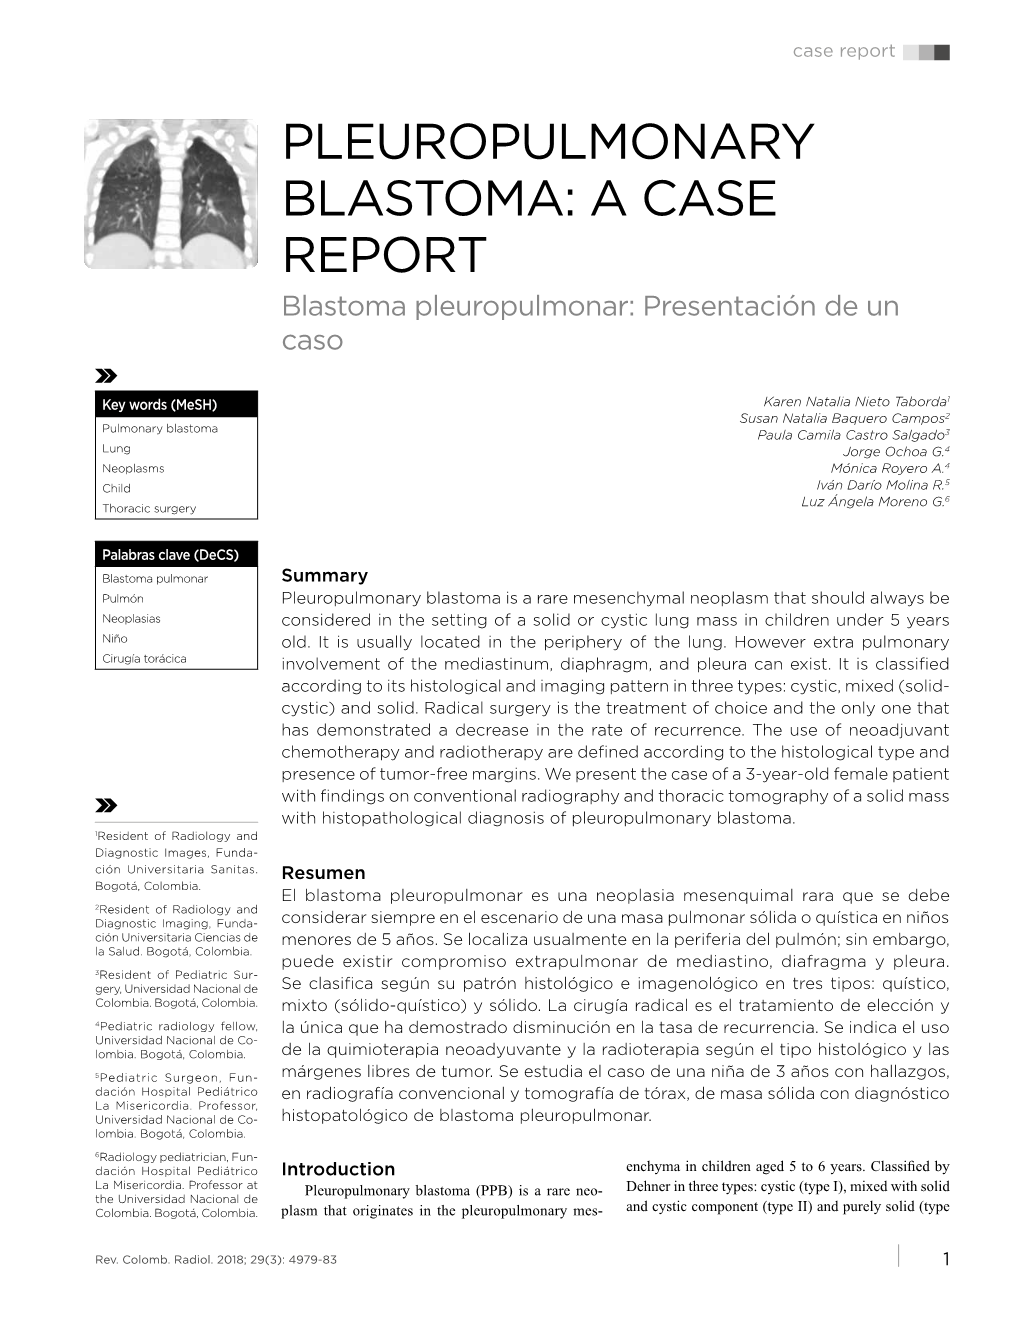 PLEUROPULMONARY BLASTOMA: a CASE REPORT Blastoma Pleuropulmonar: Presentación De Un Caso